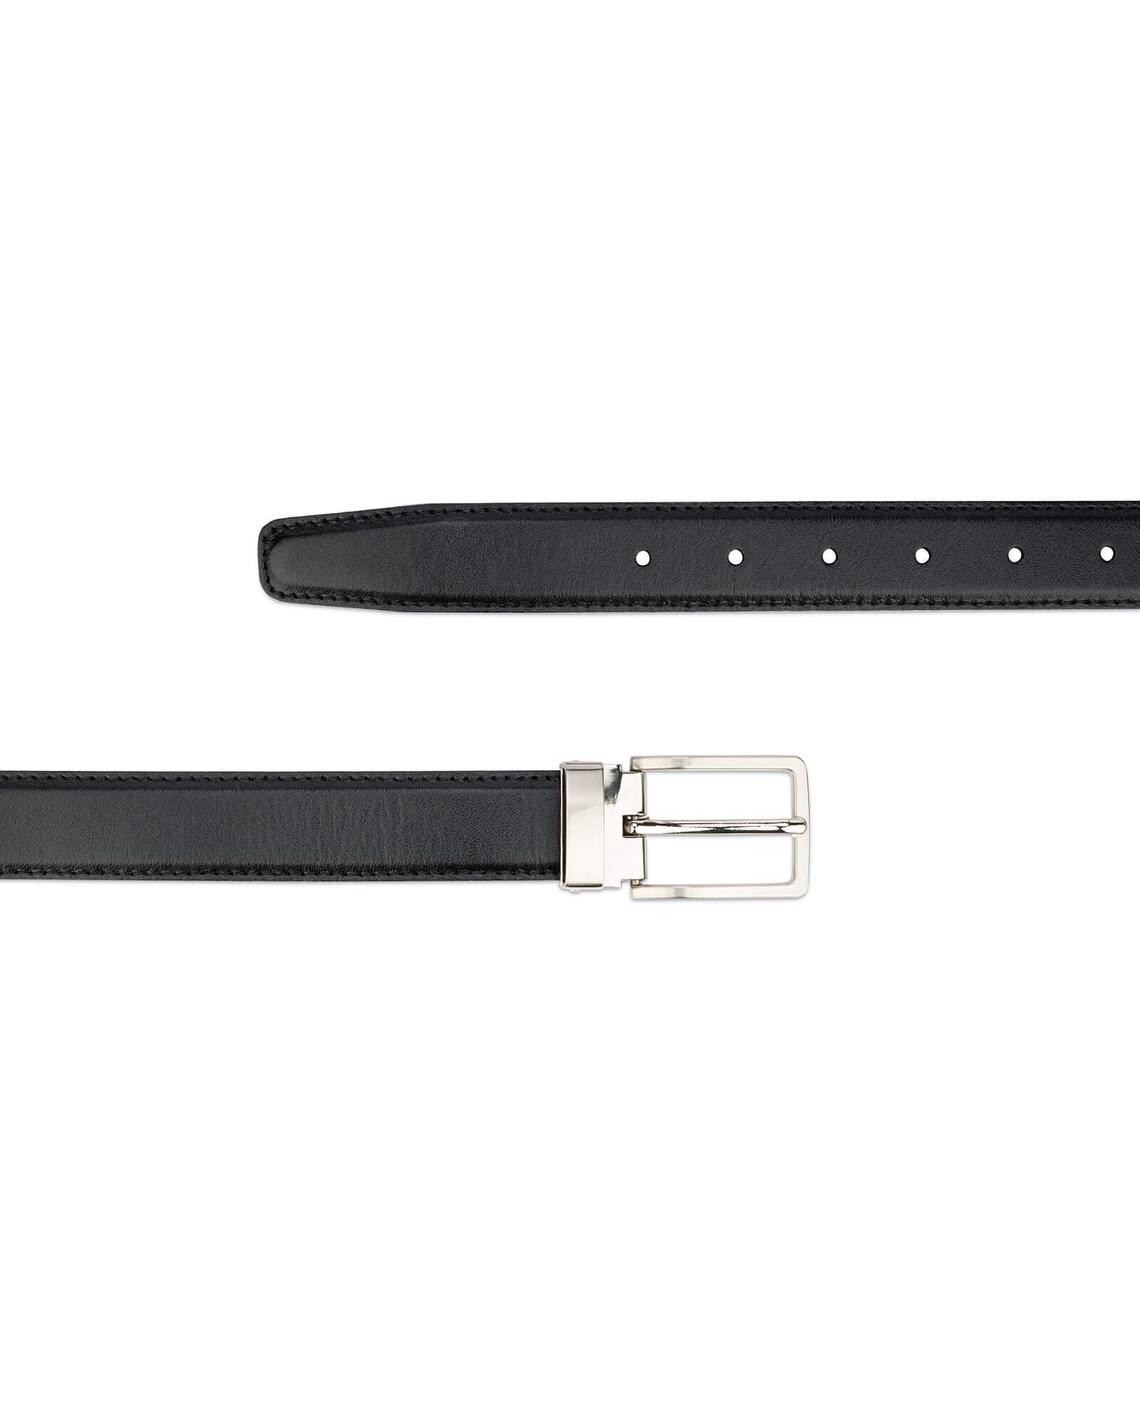 Buy Mens Black Dress Belt | 3.0 cm Classic Buckle | Capo Pelle